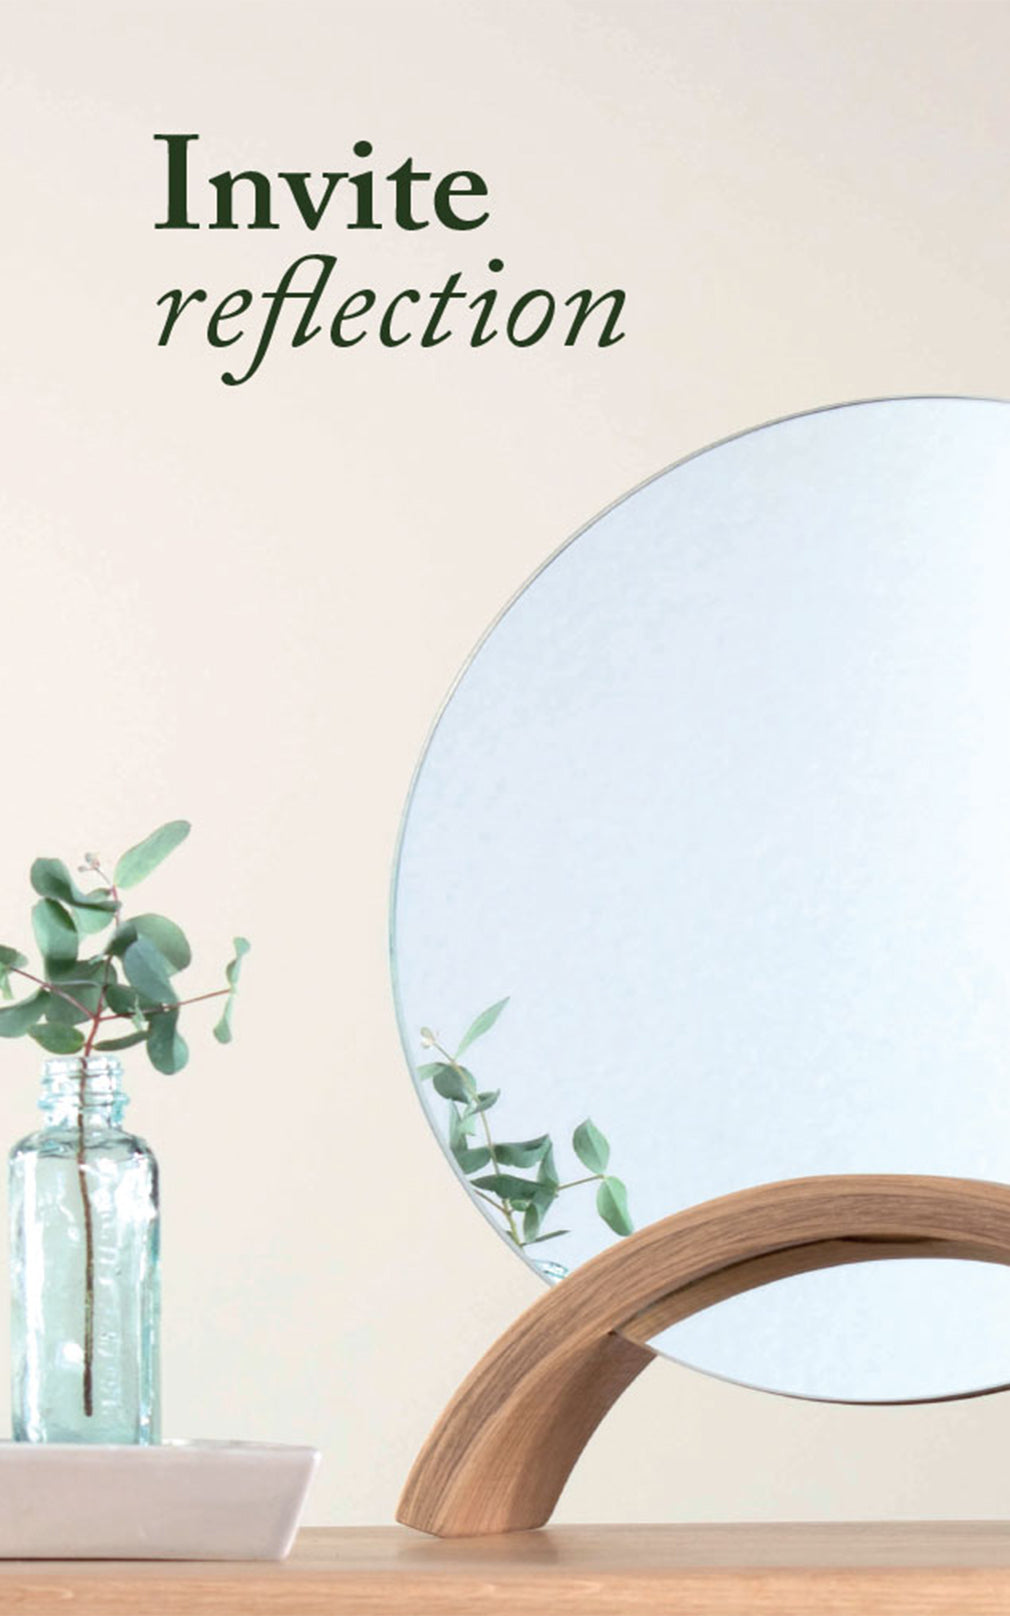 Logbook Volume 6 Invite Reflection